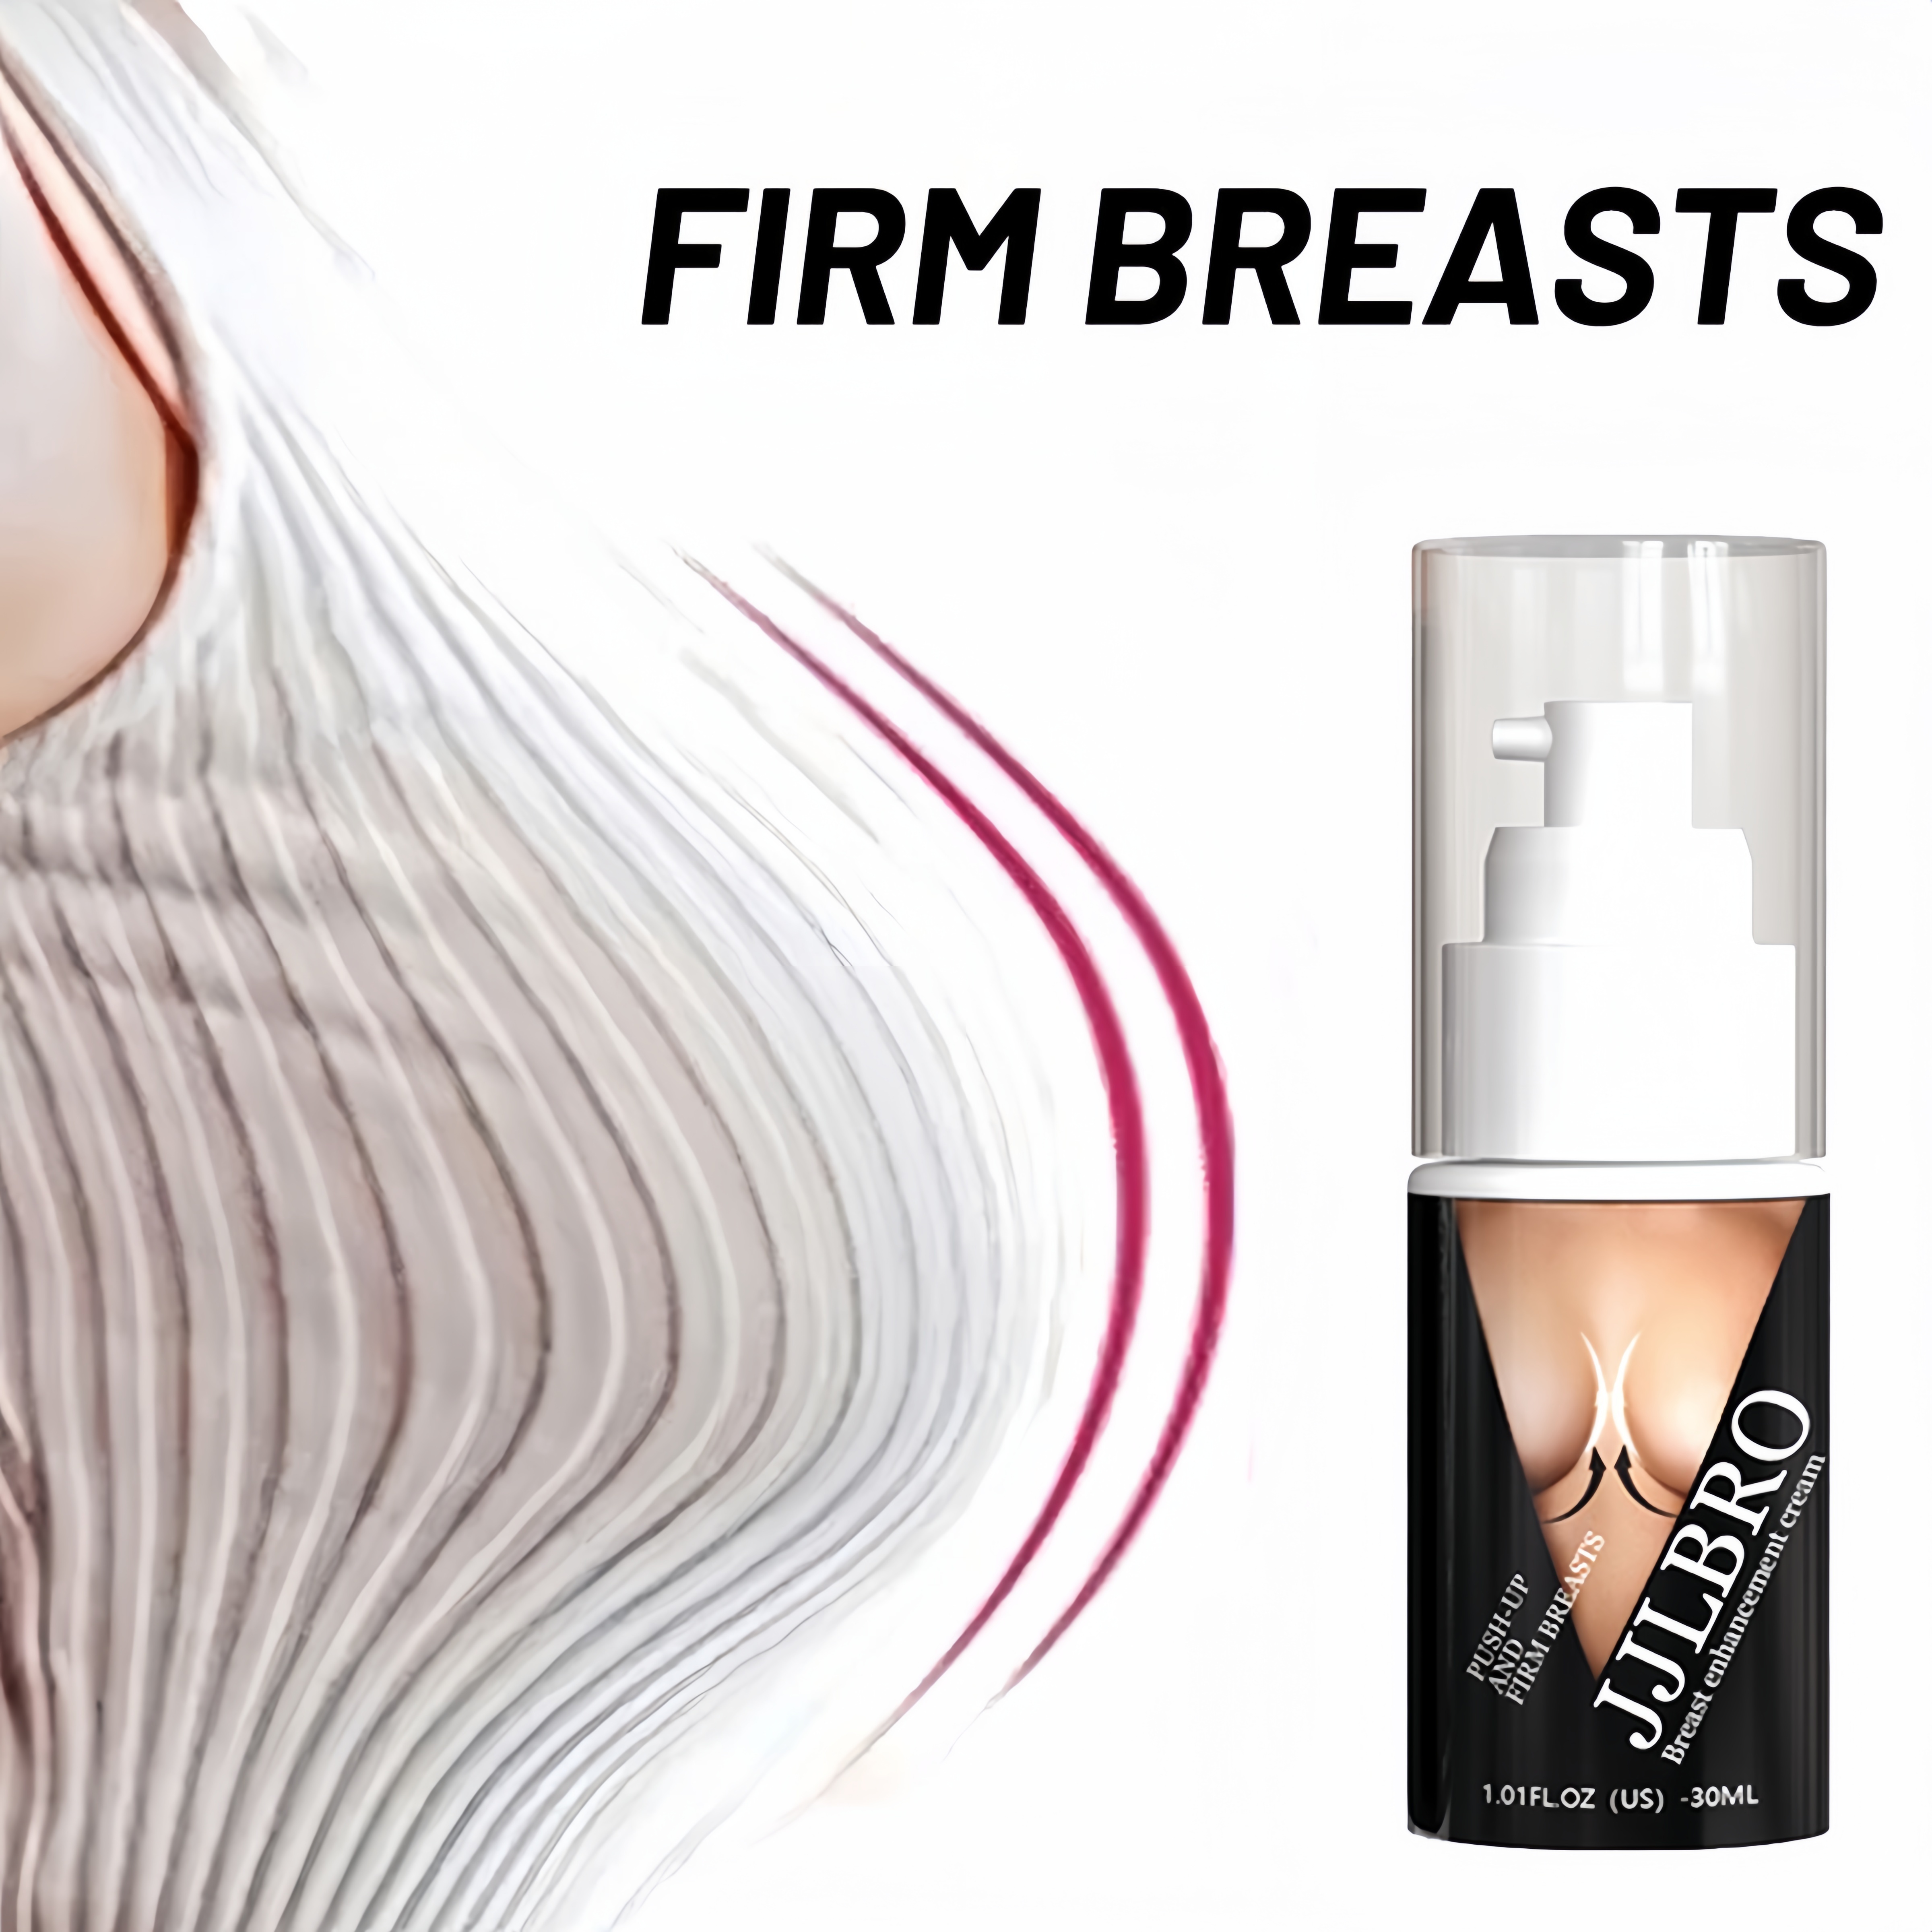 Bust Boost Boobs Breast Firmer Enlargement Firming Lifting Cream Pu